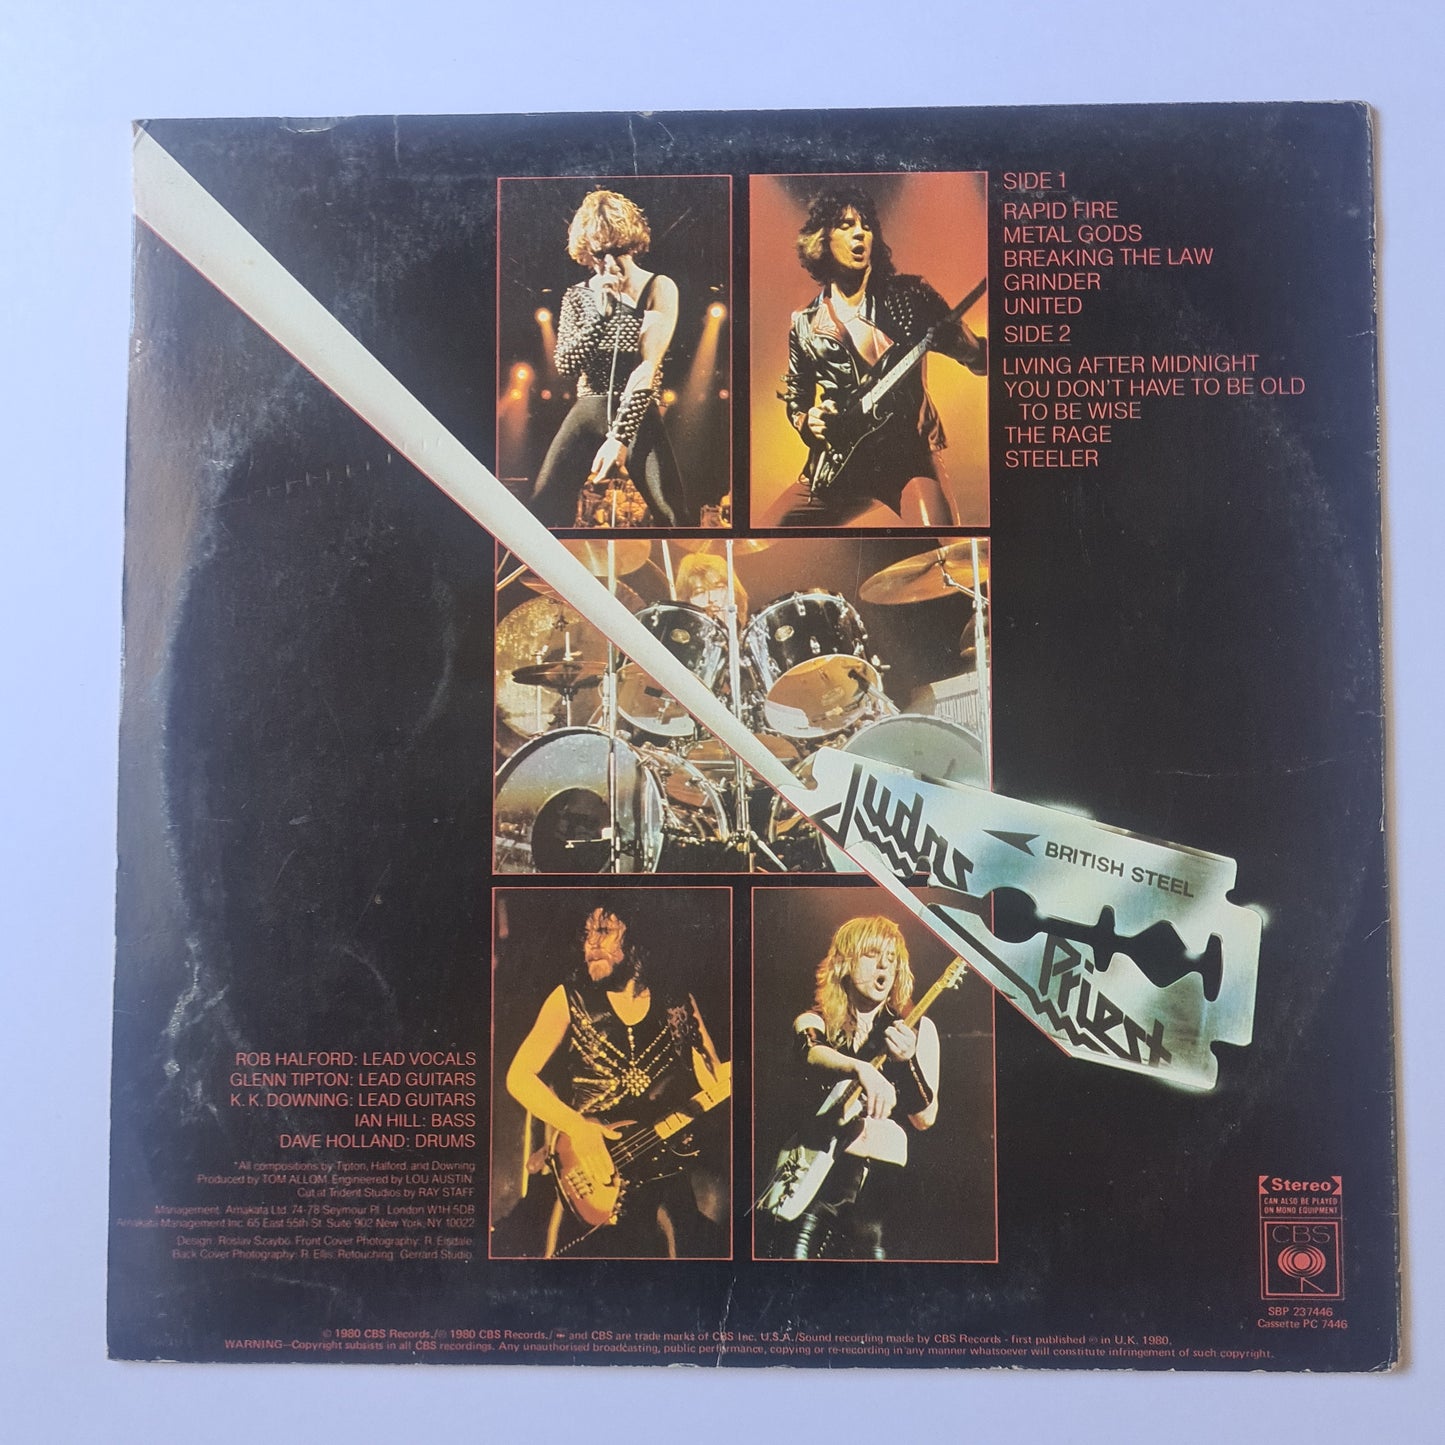 Judas Priest – British Steel - 1980 - Vinyl Record